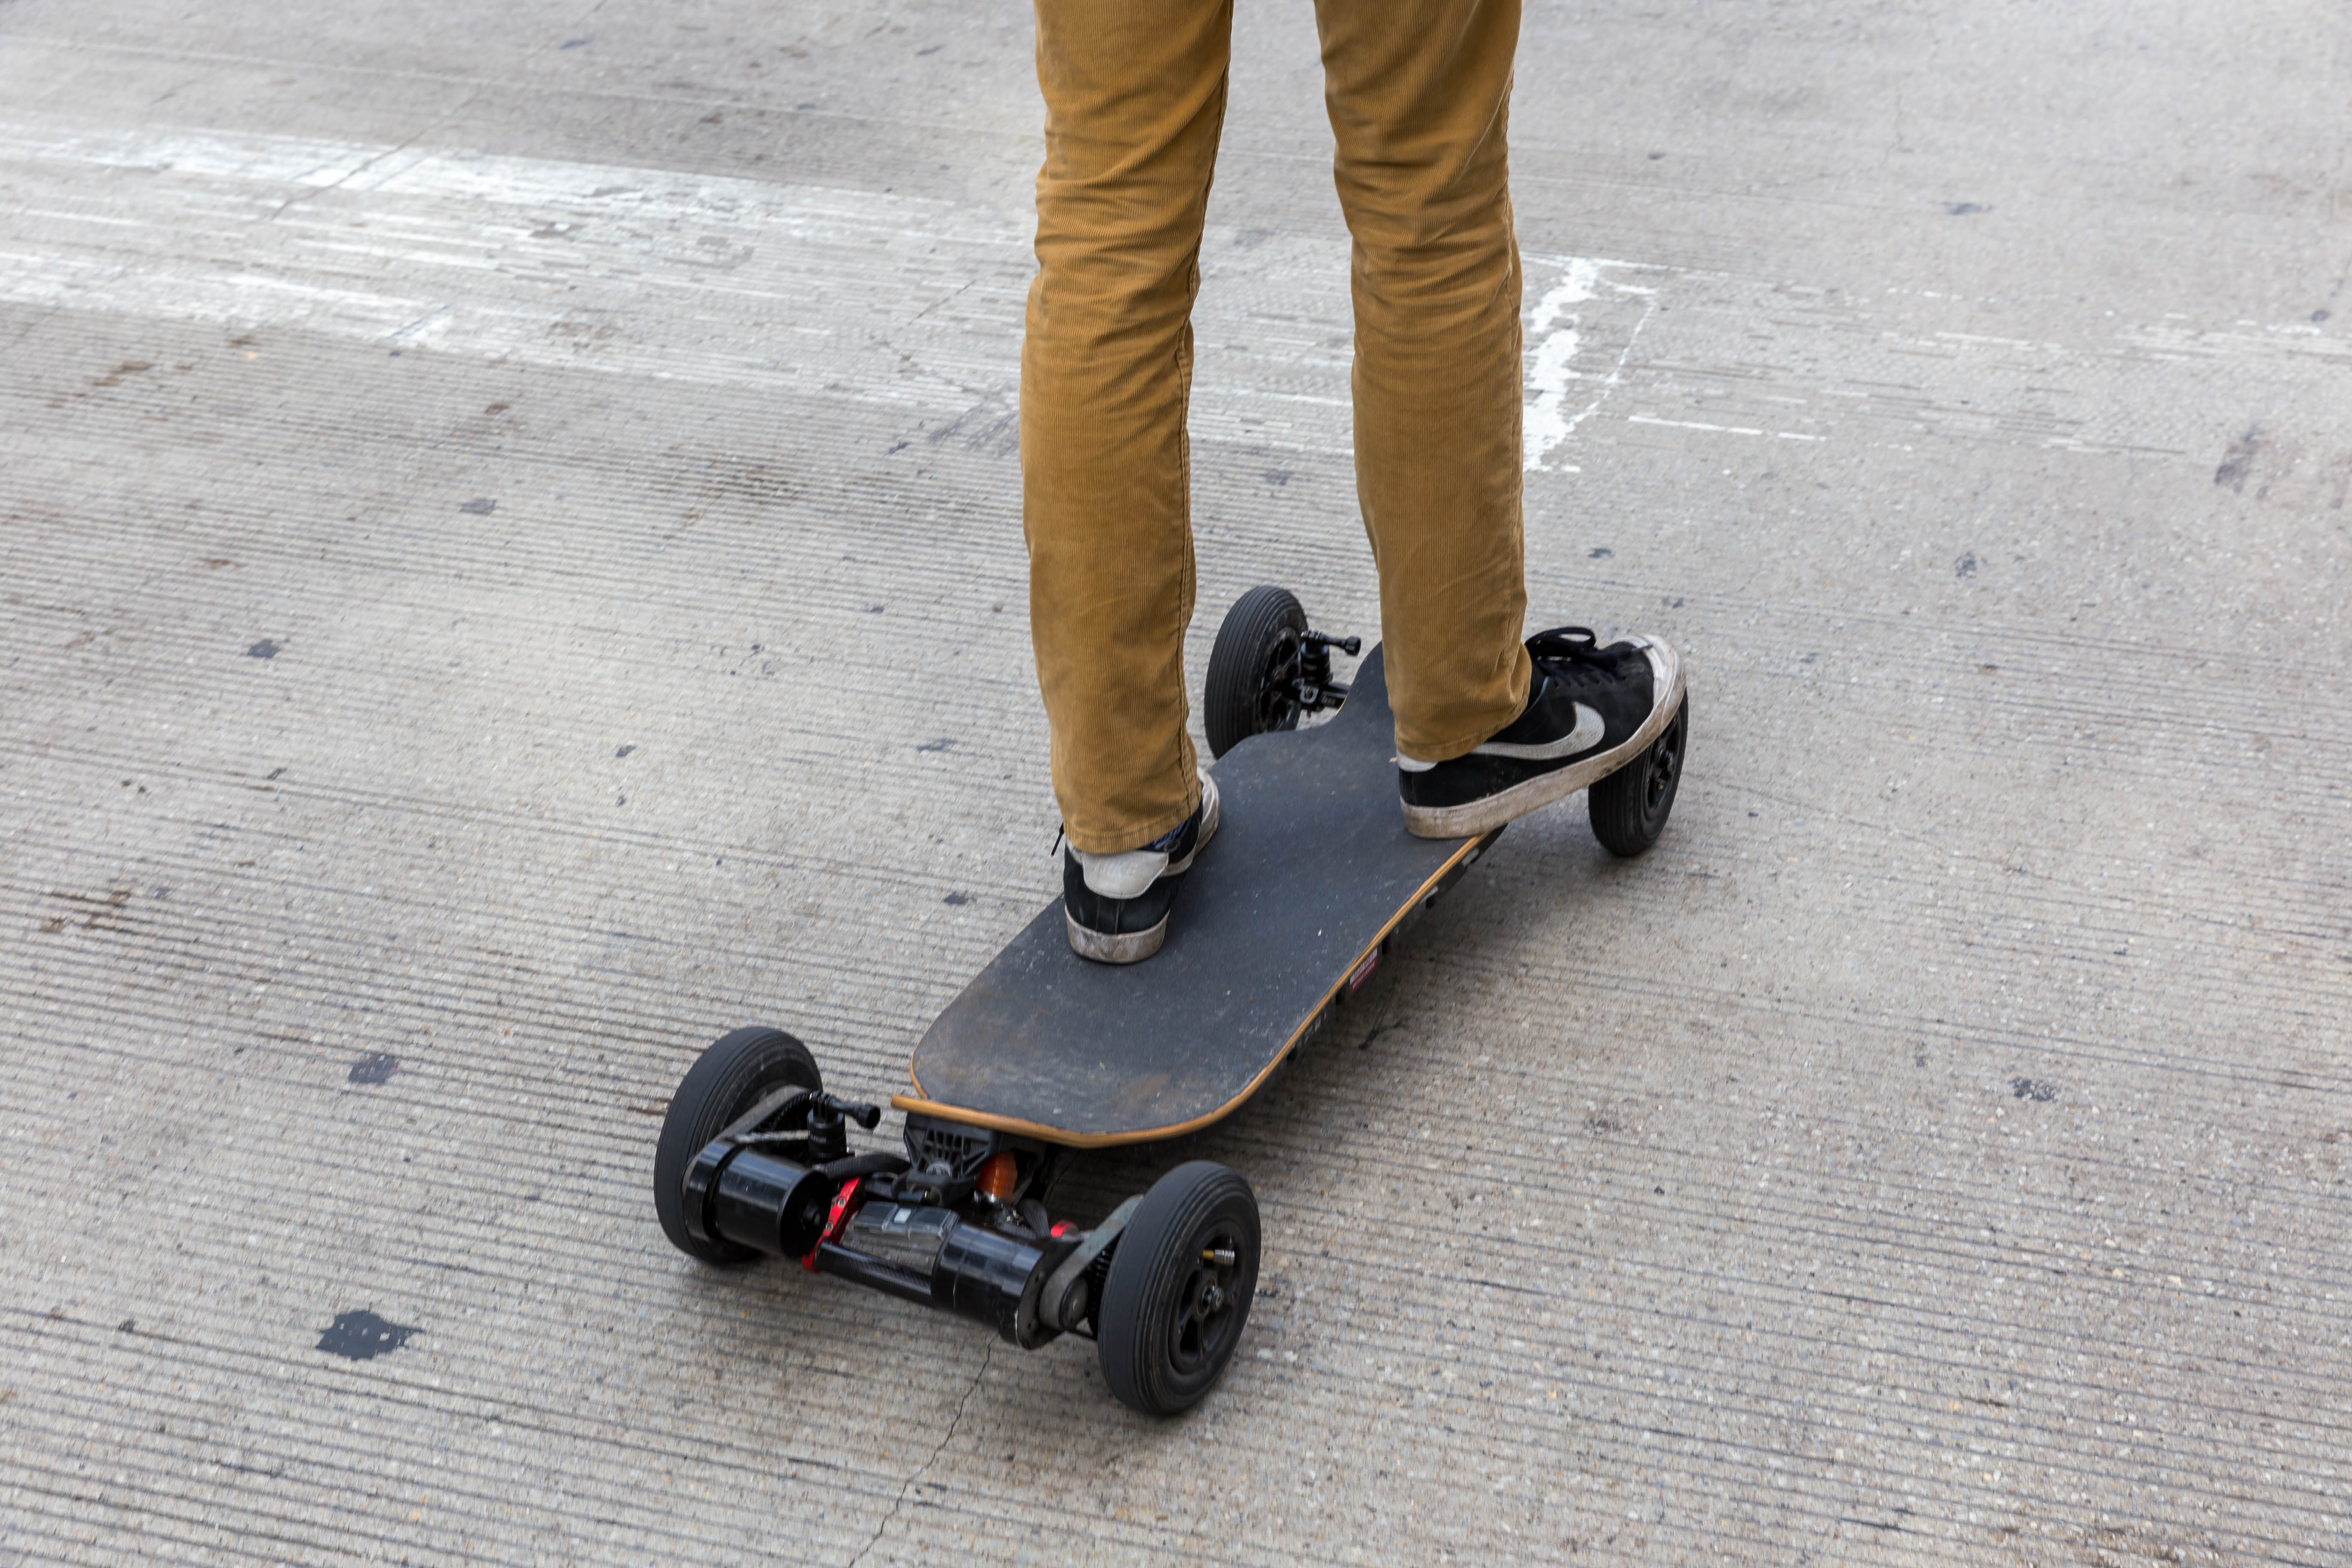 Best Electric Skateboard of 2023 (Budget-Friendly)